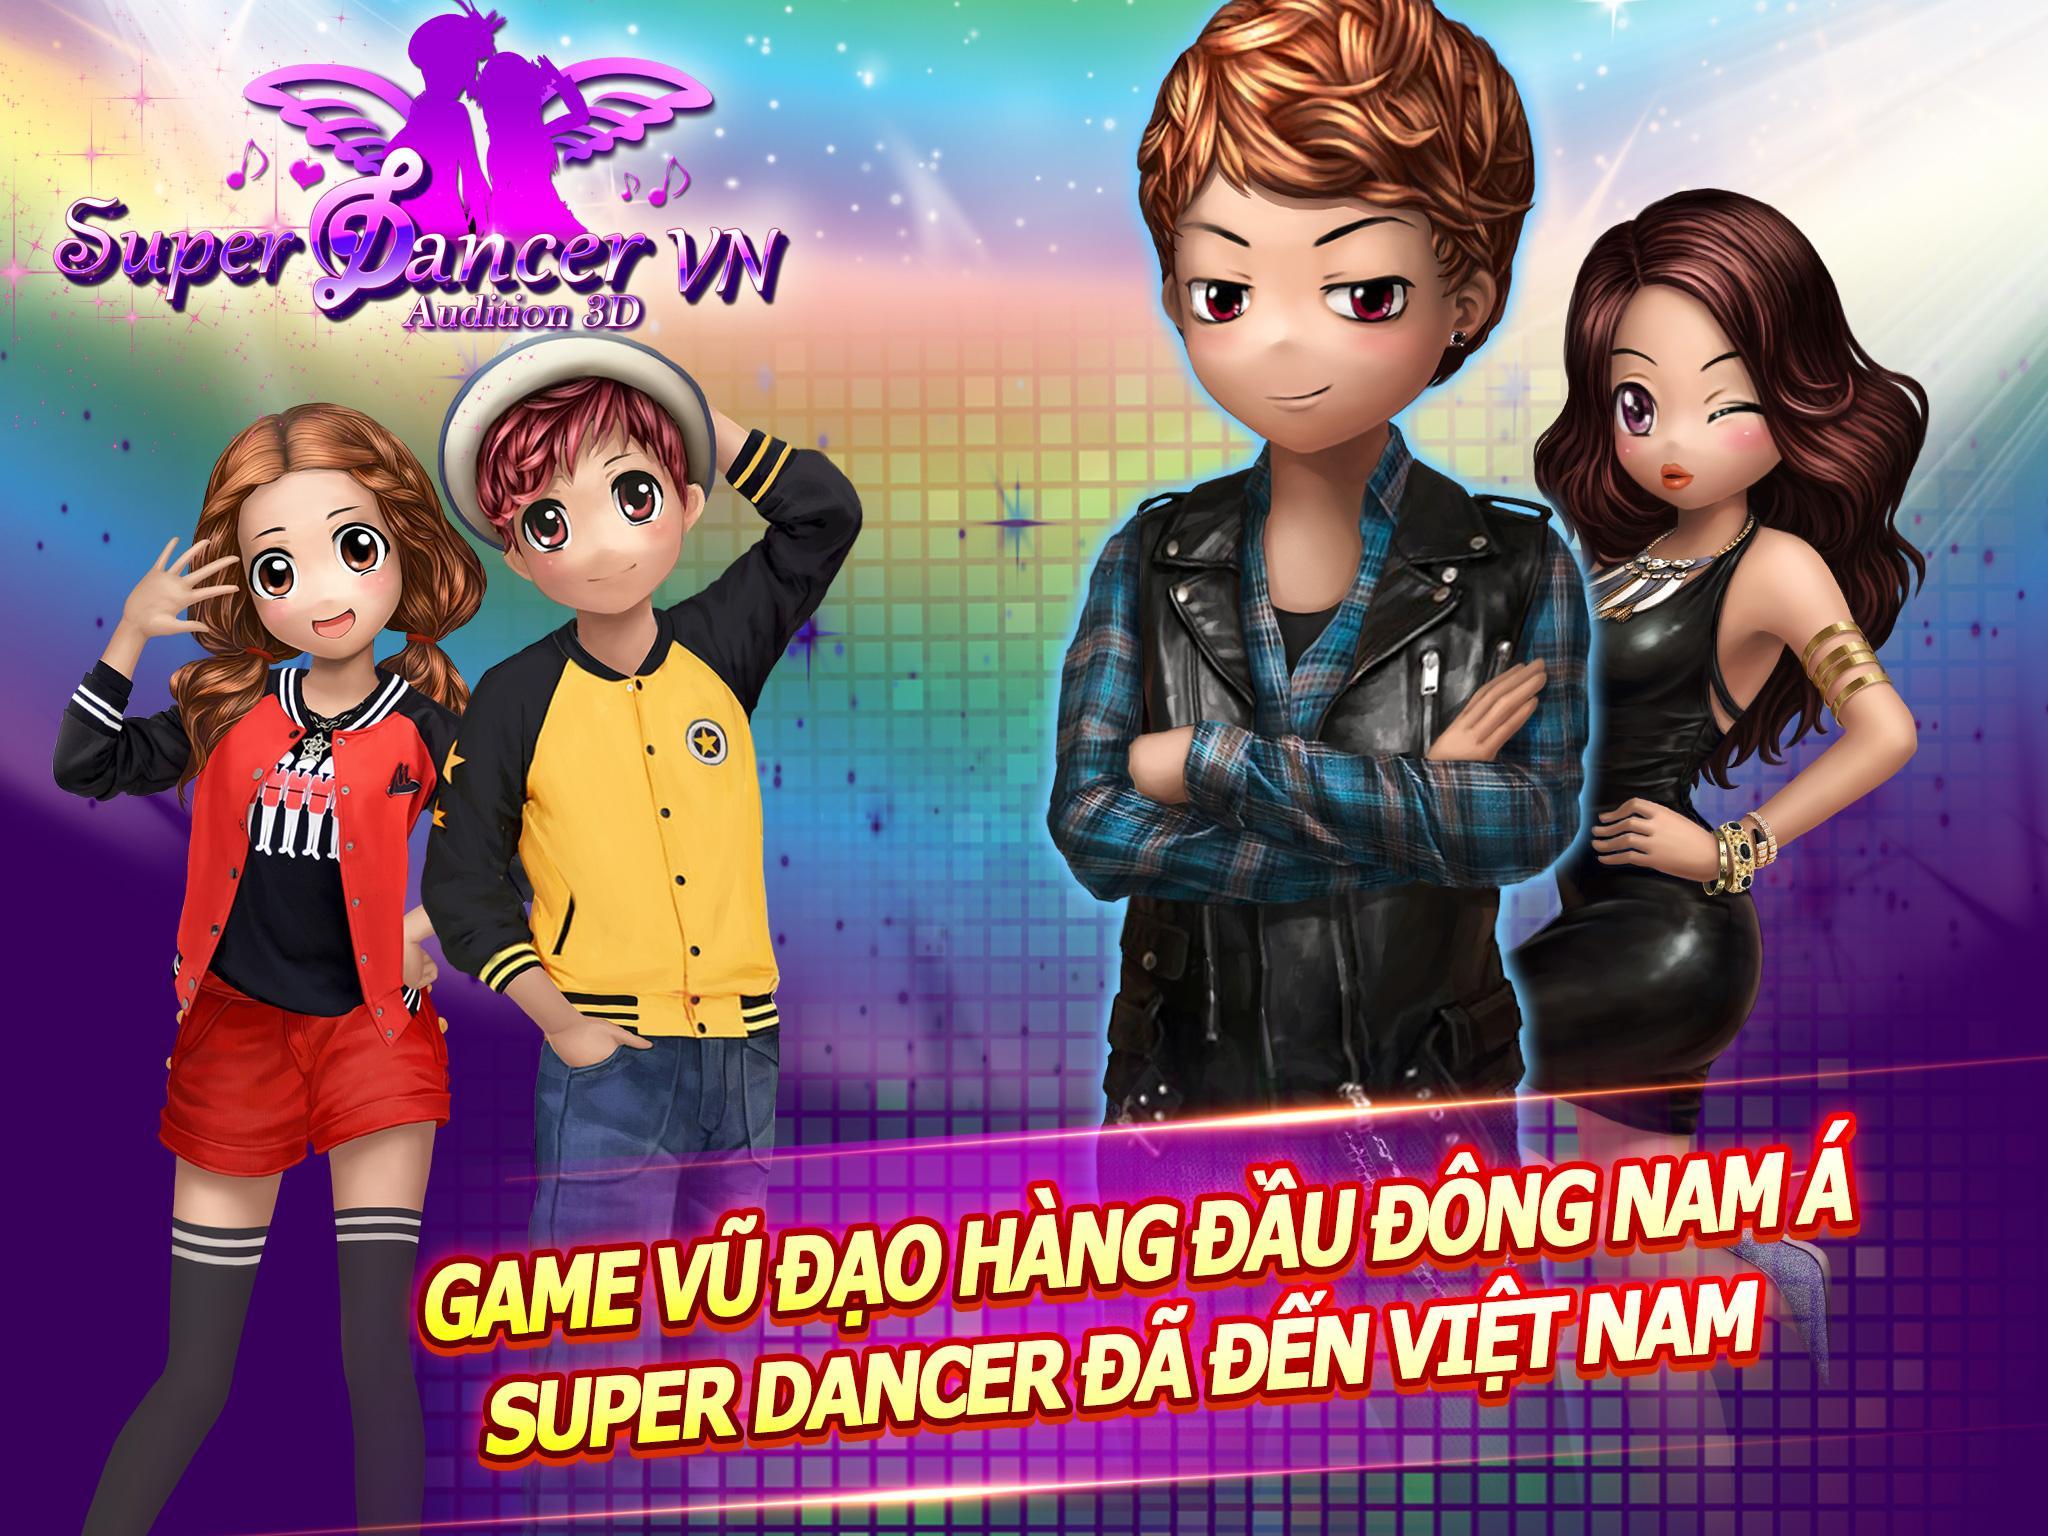 Screenshot 1 of Super Dancer VN - Audição 3D 